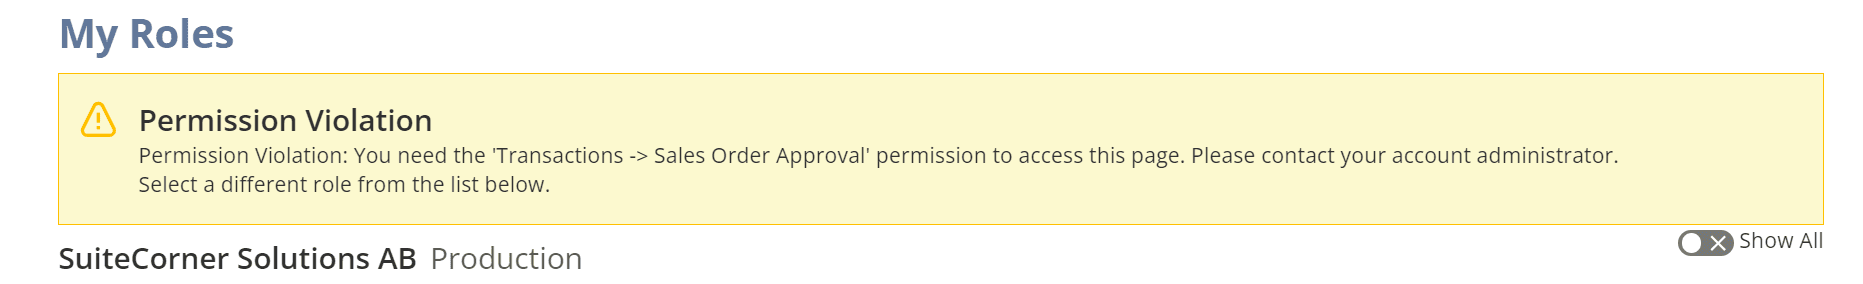 NetSuite Permission Violation